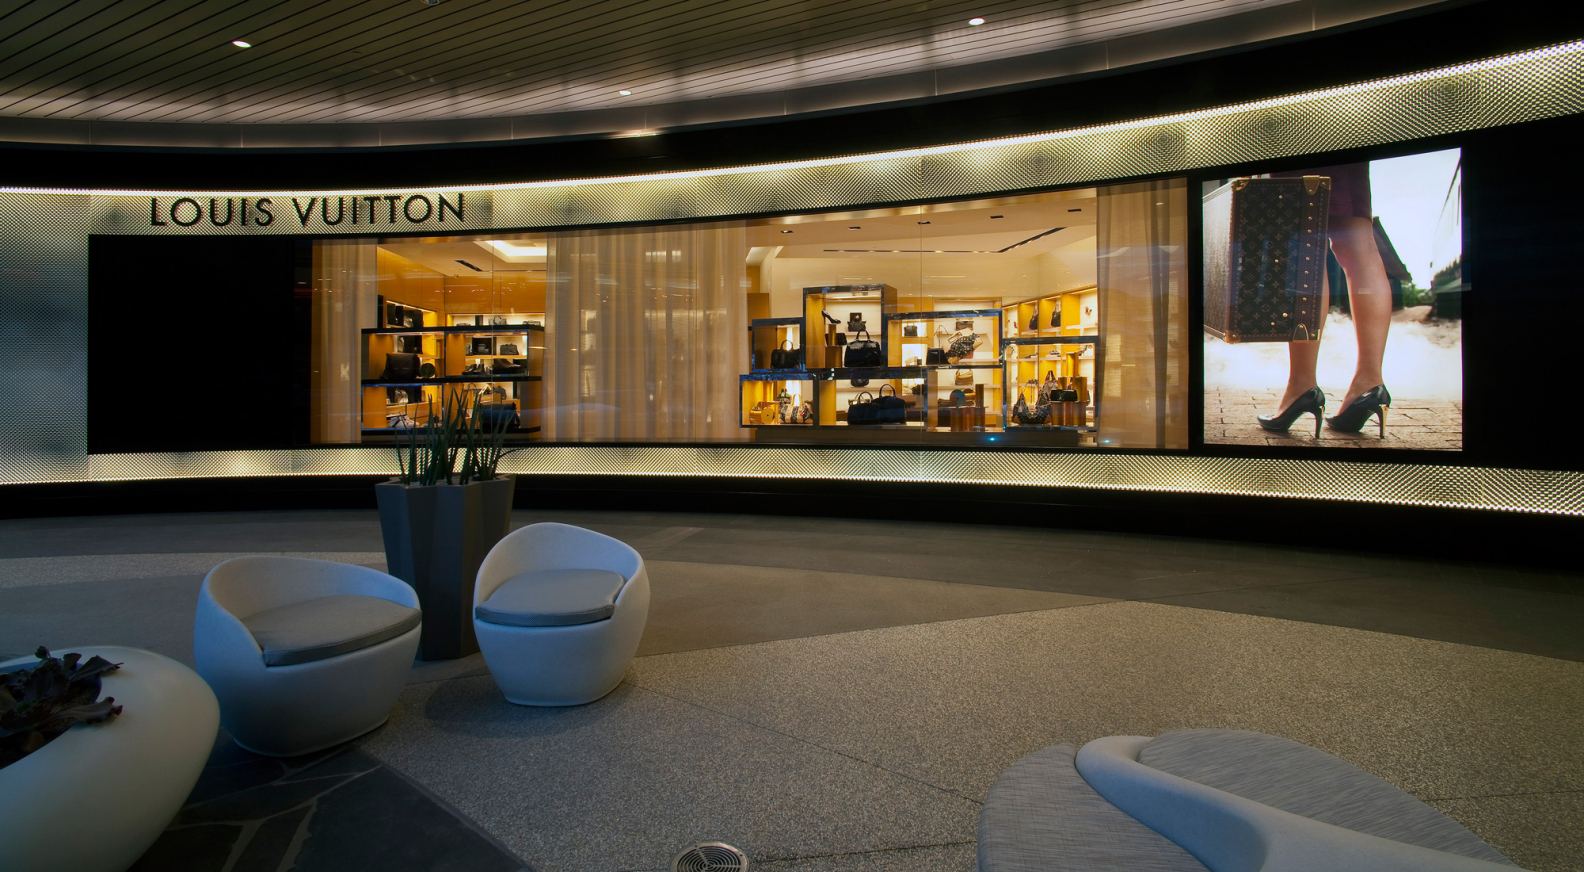 Maison Louis Vuitton New Bond Street: 2020 Best of Year Winner for